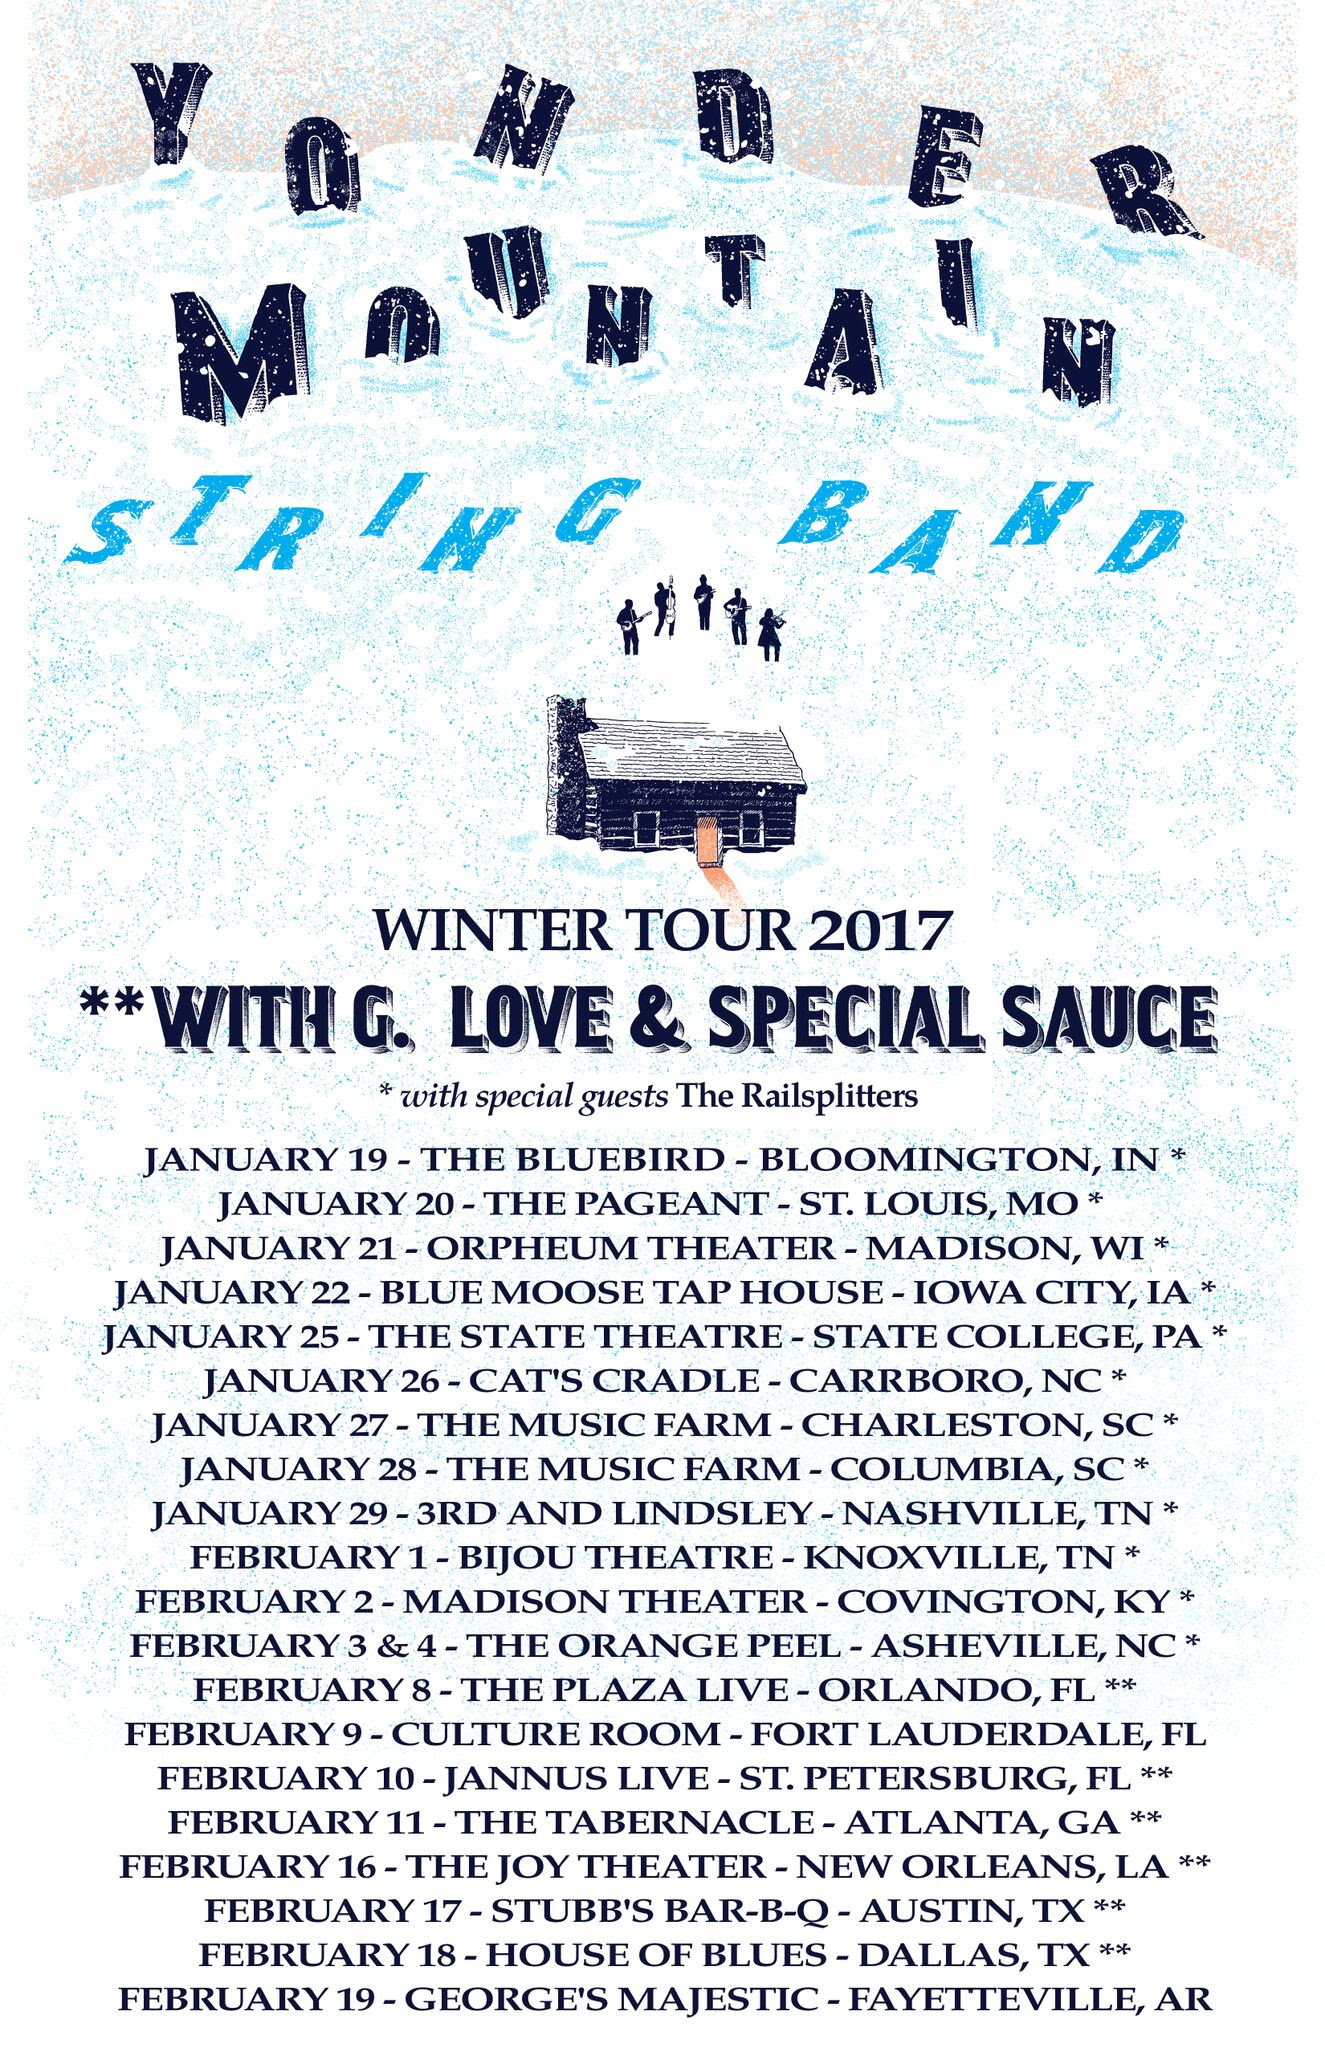 Yonder Mountain String Band Winter 2017 tour dates. Photo by: Yonder Mountain String Band